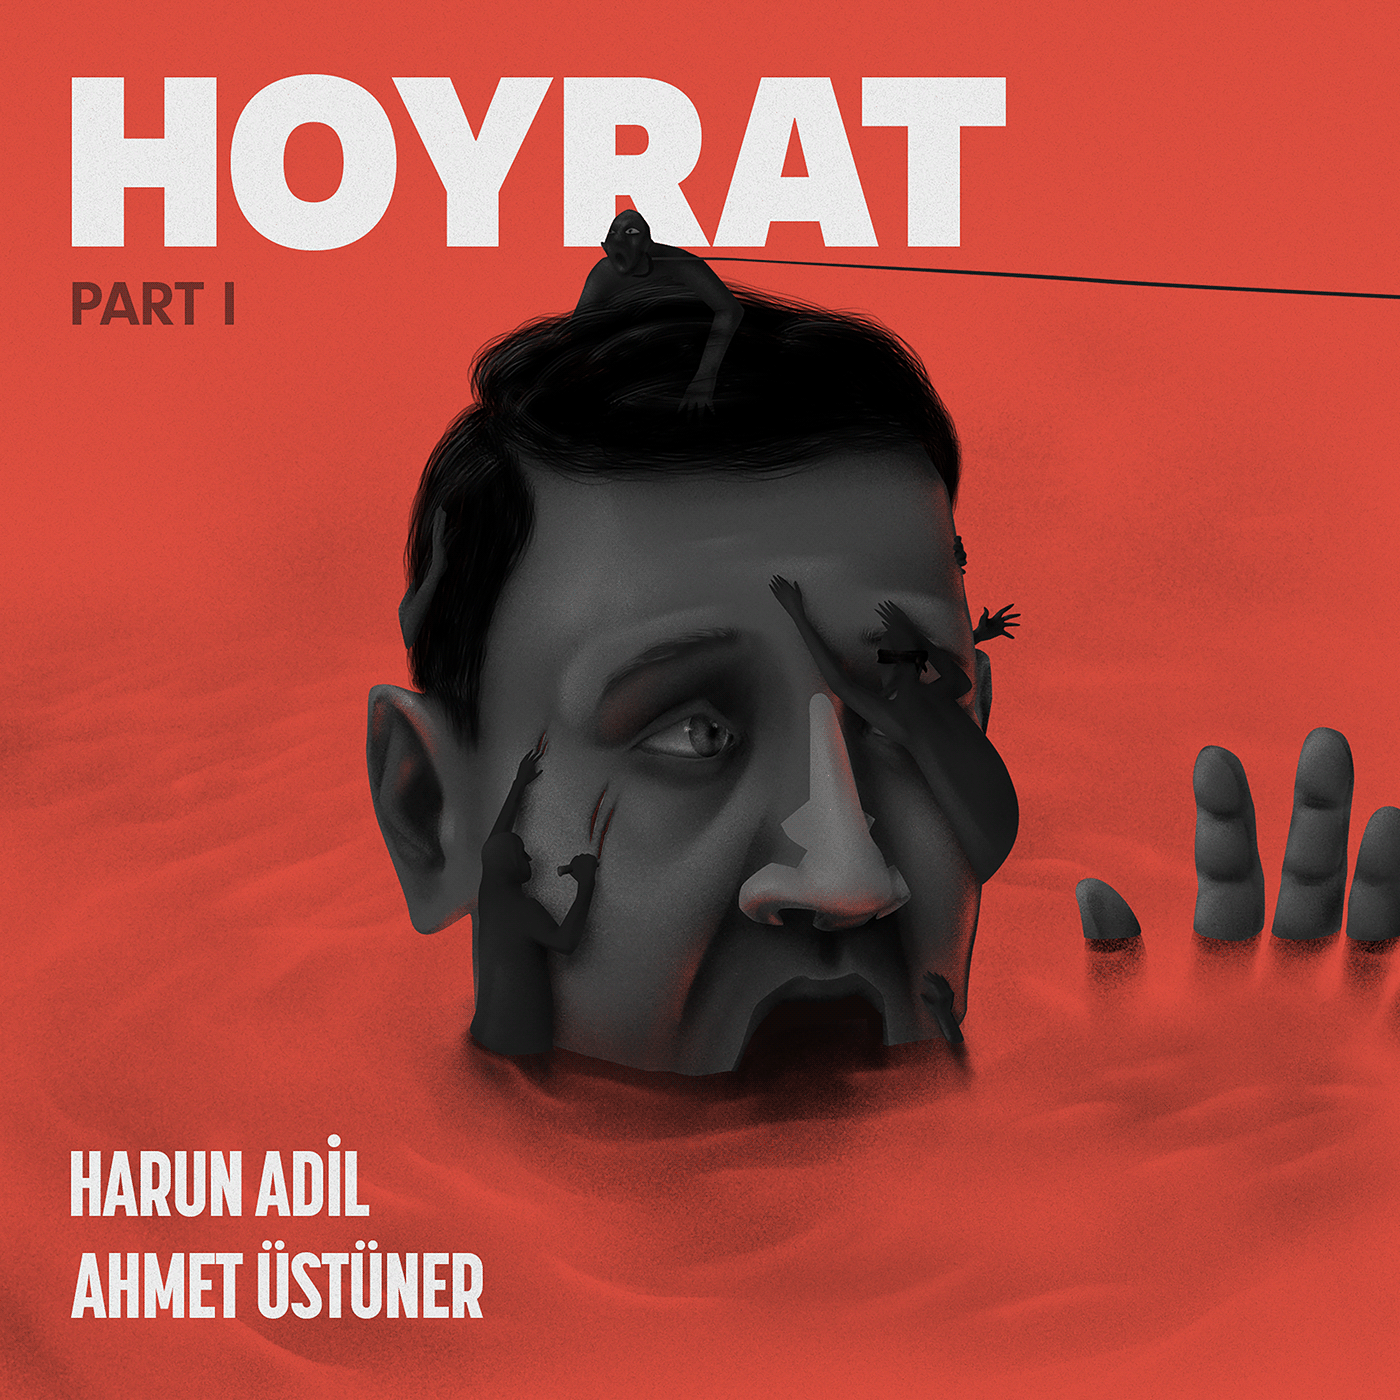 album cover artwork Digital Art  hoyrat ILLUSTRATION  music portrait abstract Cover Art release